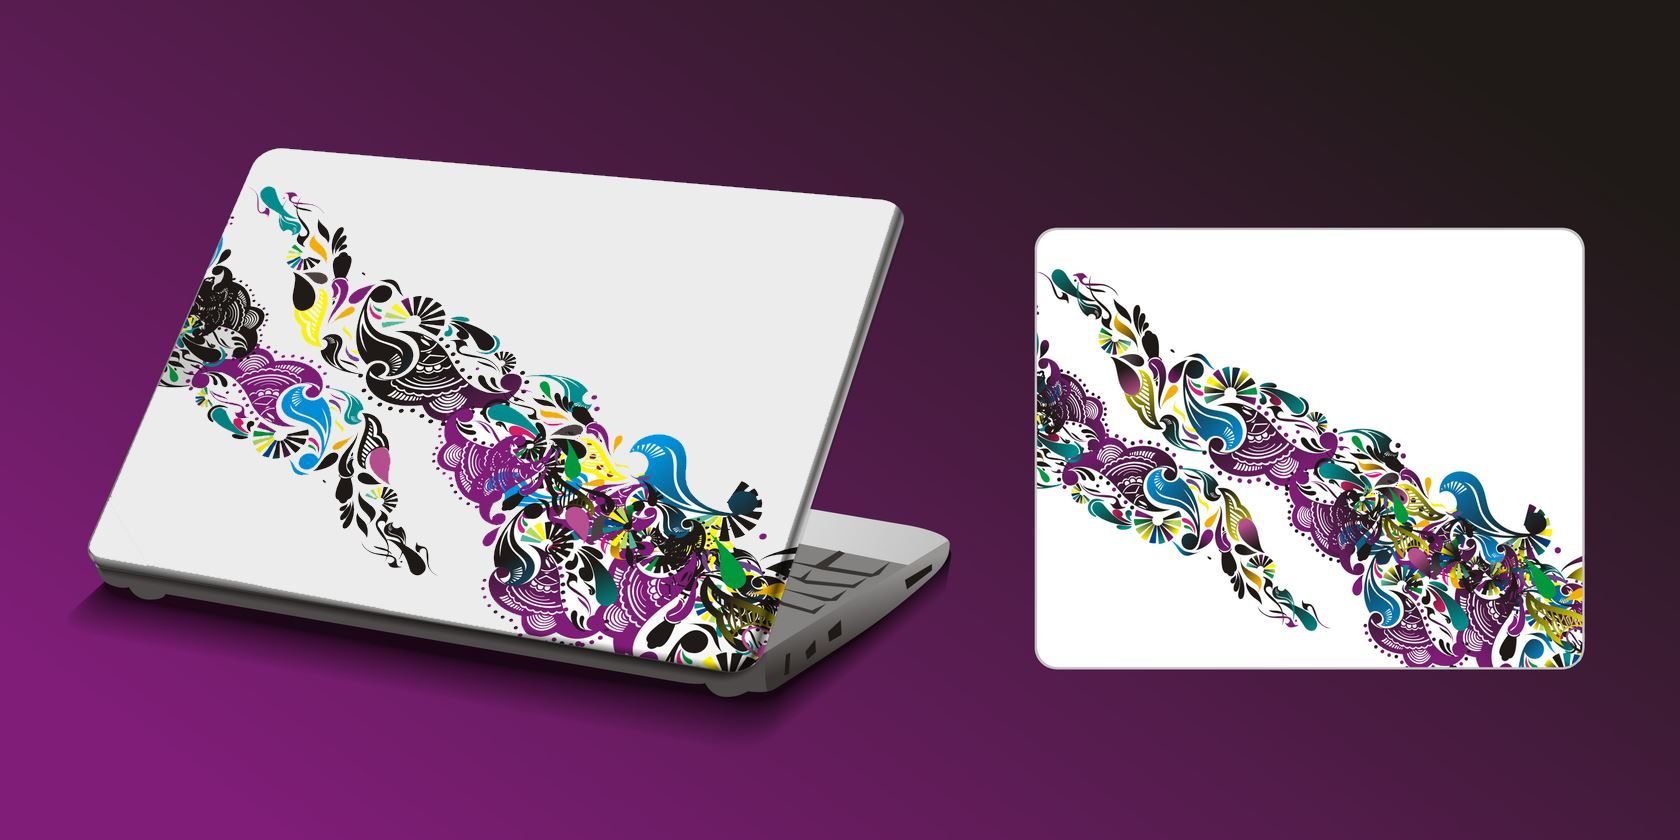 Automáticamente conversión Destruir 5 Awesome Laptop Decoration Ideas: Stickers, Cases, and More